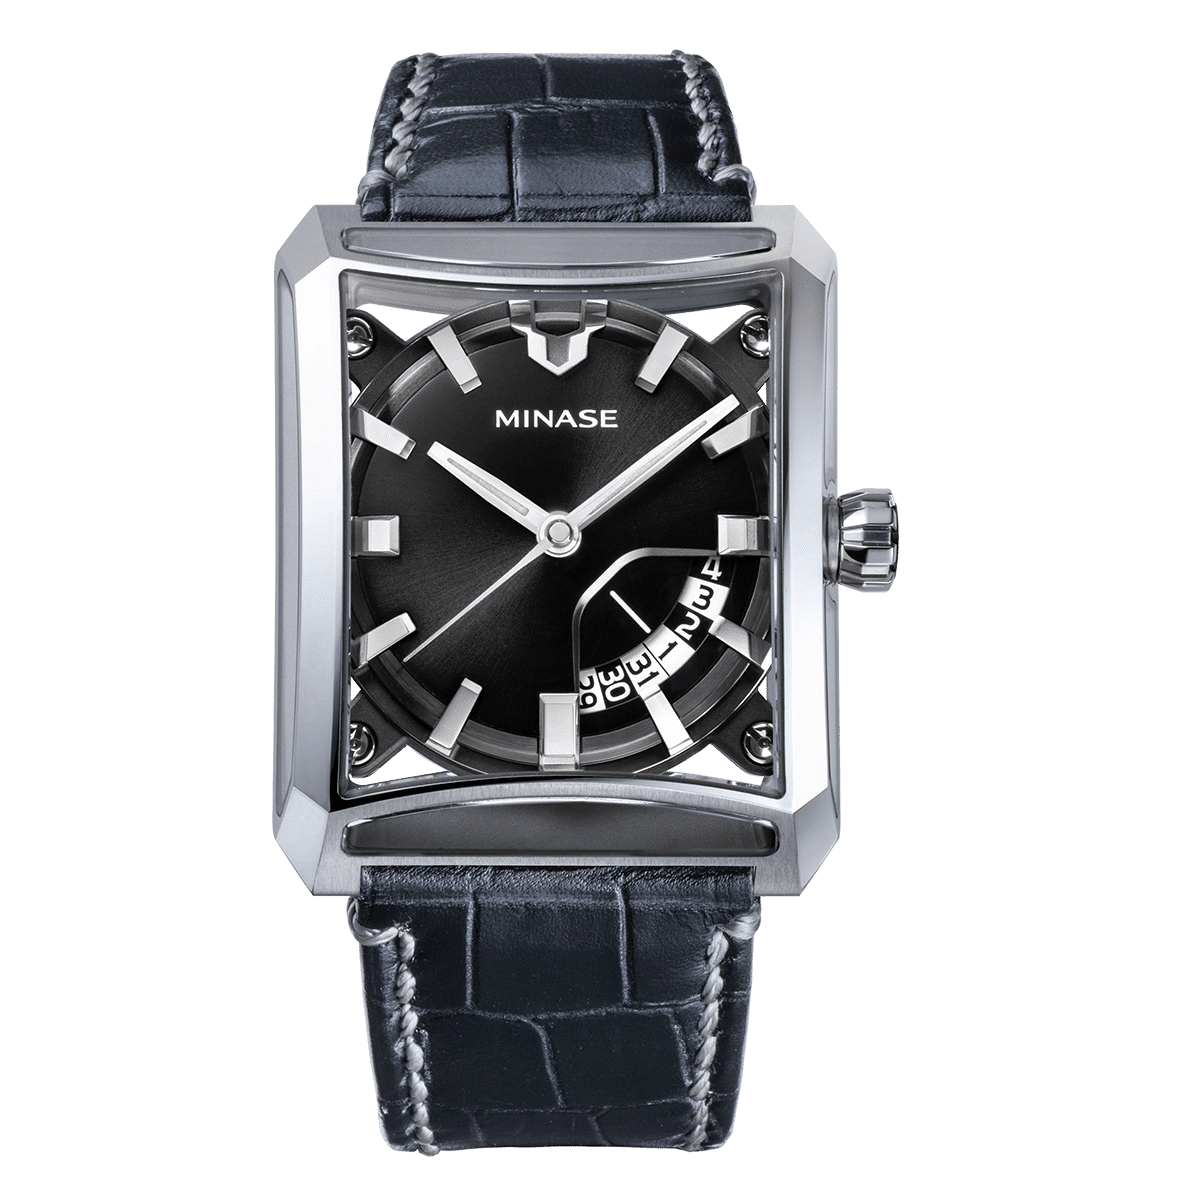 minase watches 7windows black leather